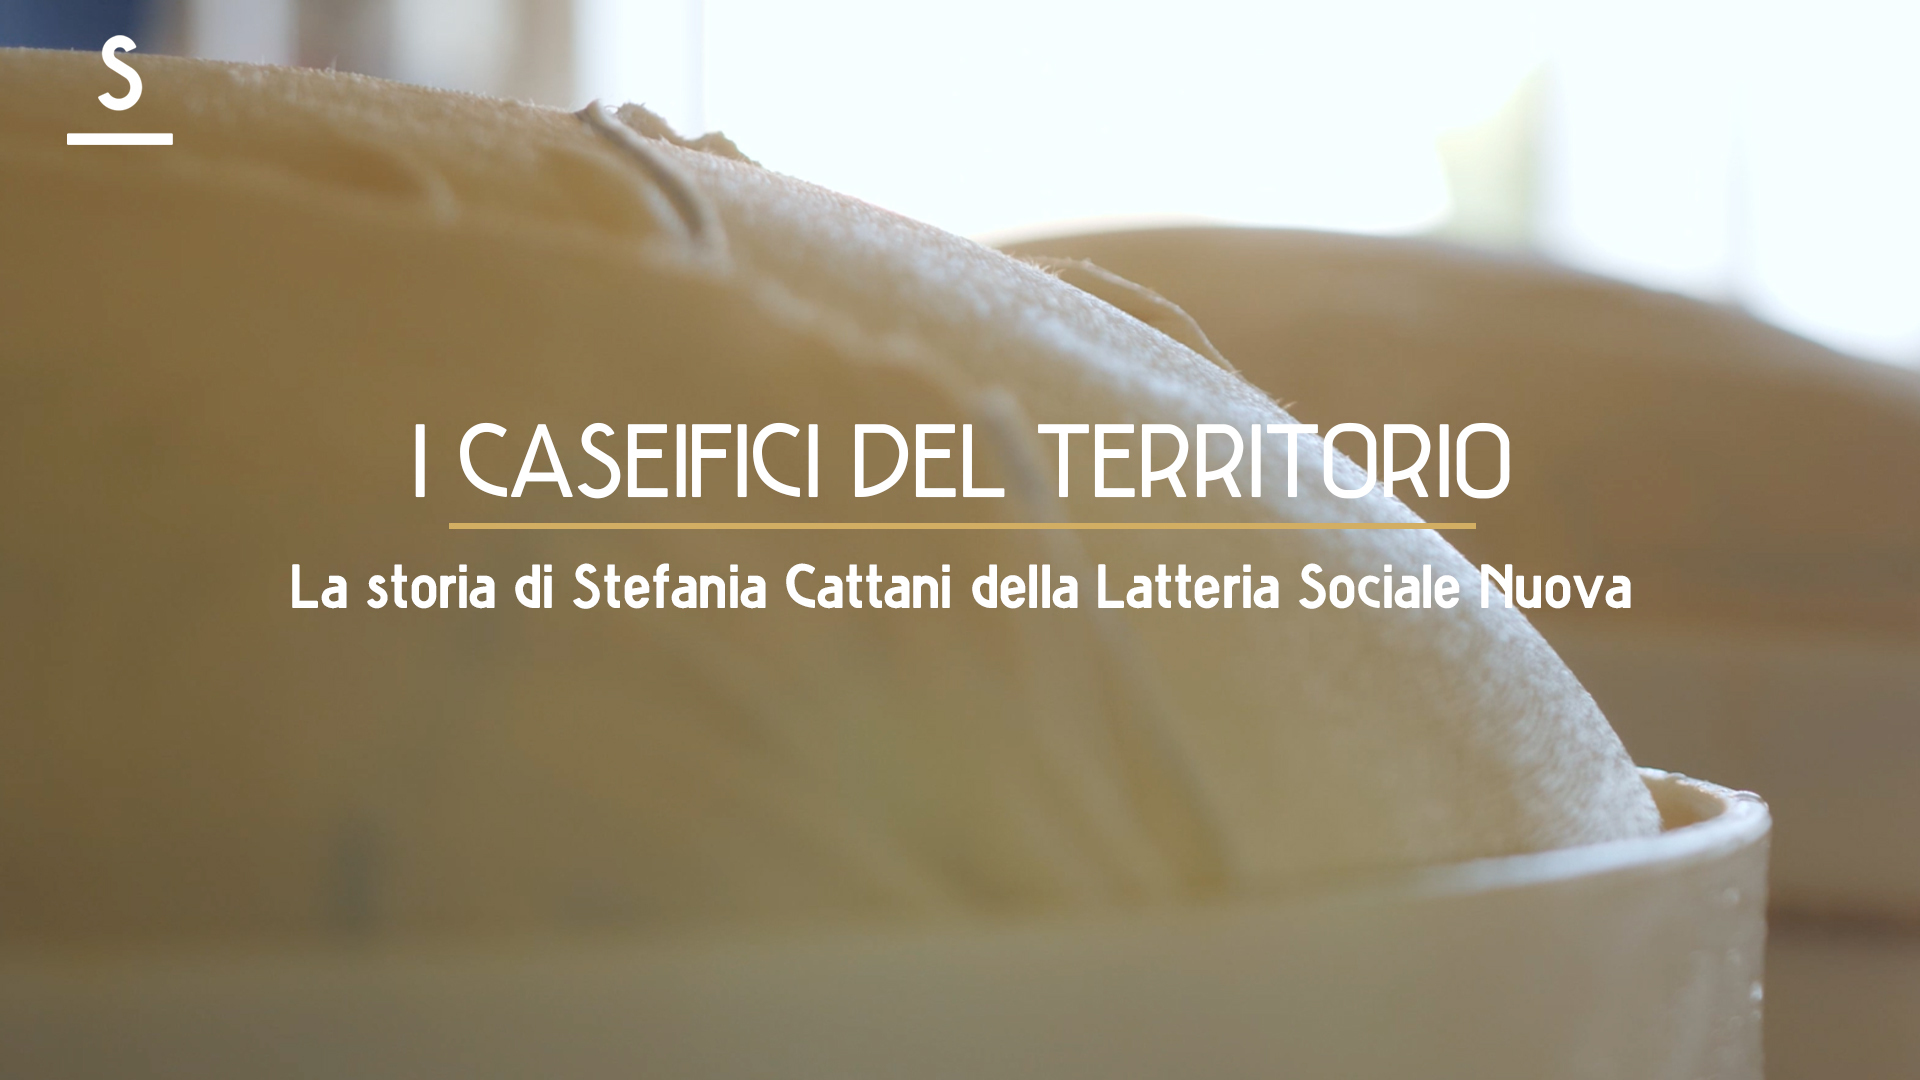 Scaglie presenta: la storia di Stefania Cattani